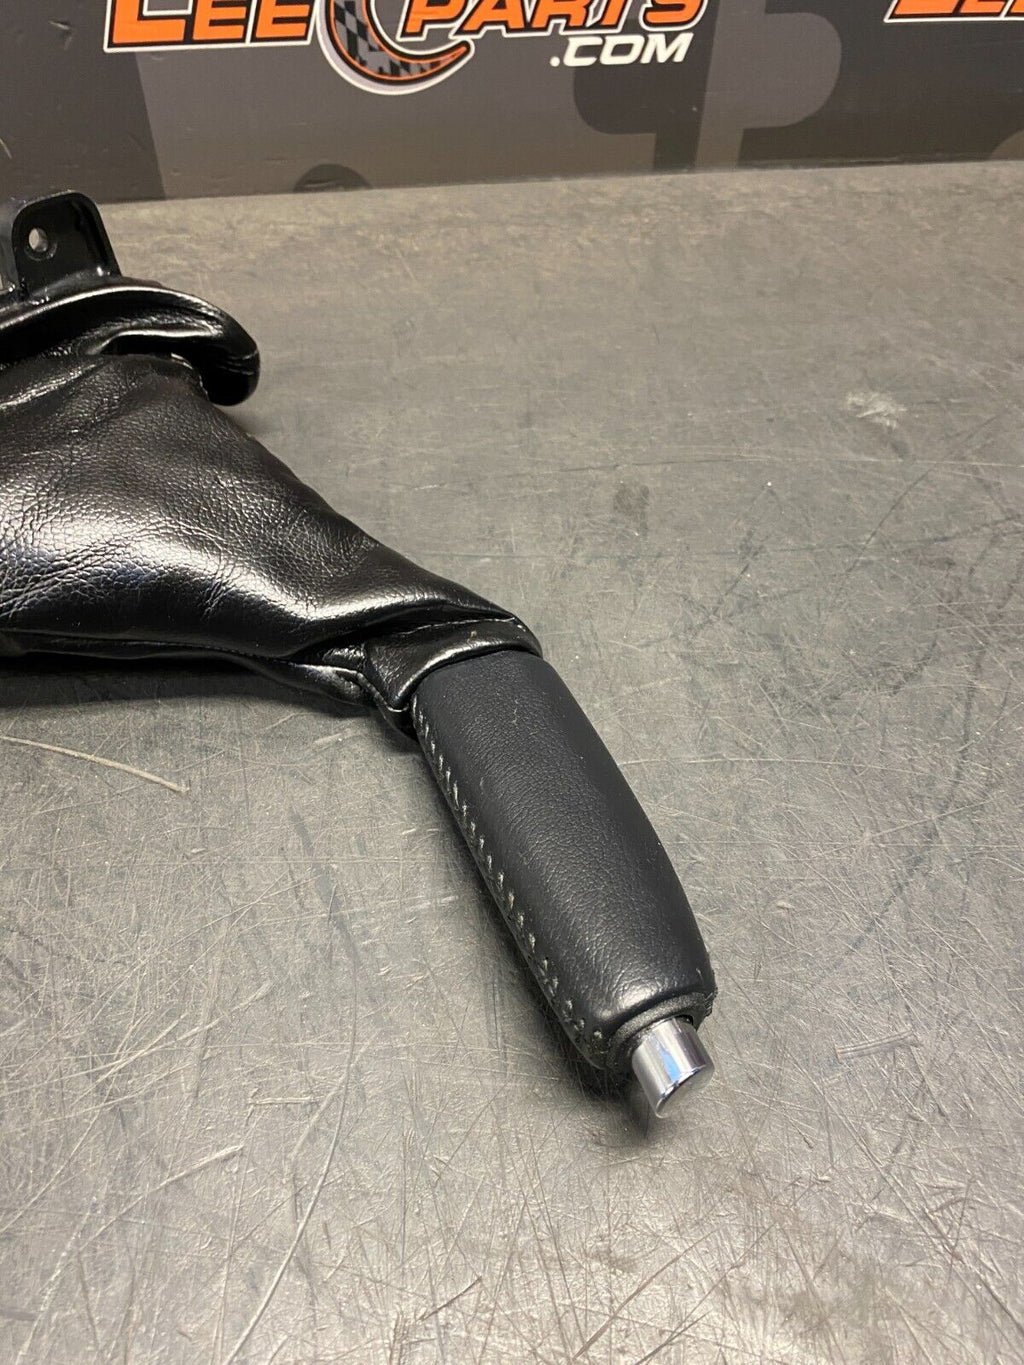 2019 FORD MUSTANG GT BULLITT OEM EMERGENCY BRAKE HANDLE BOOT USED